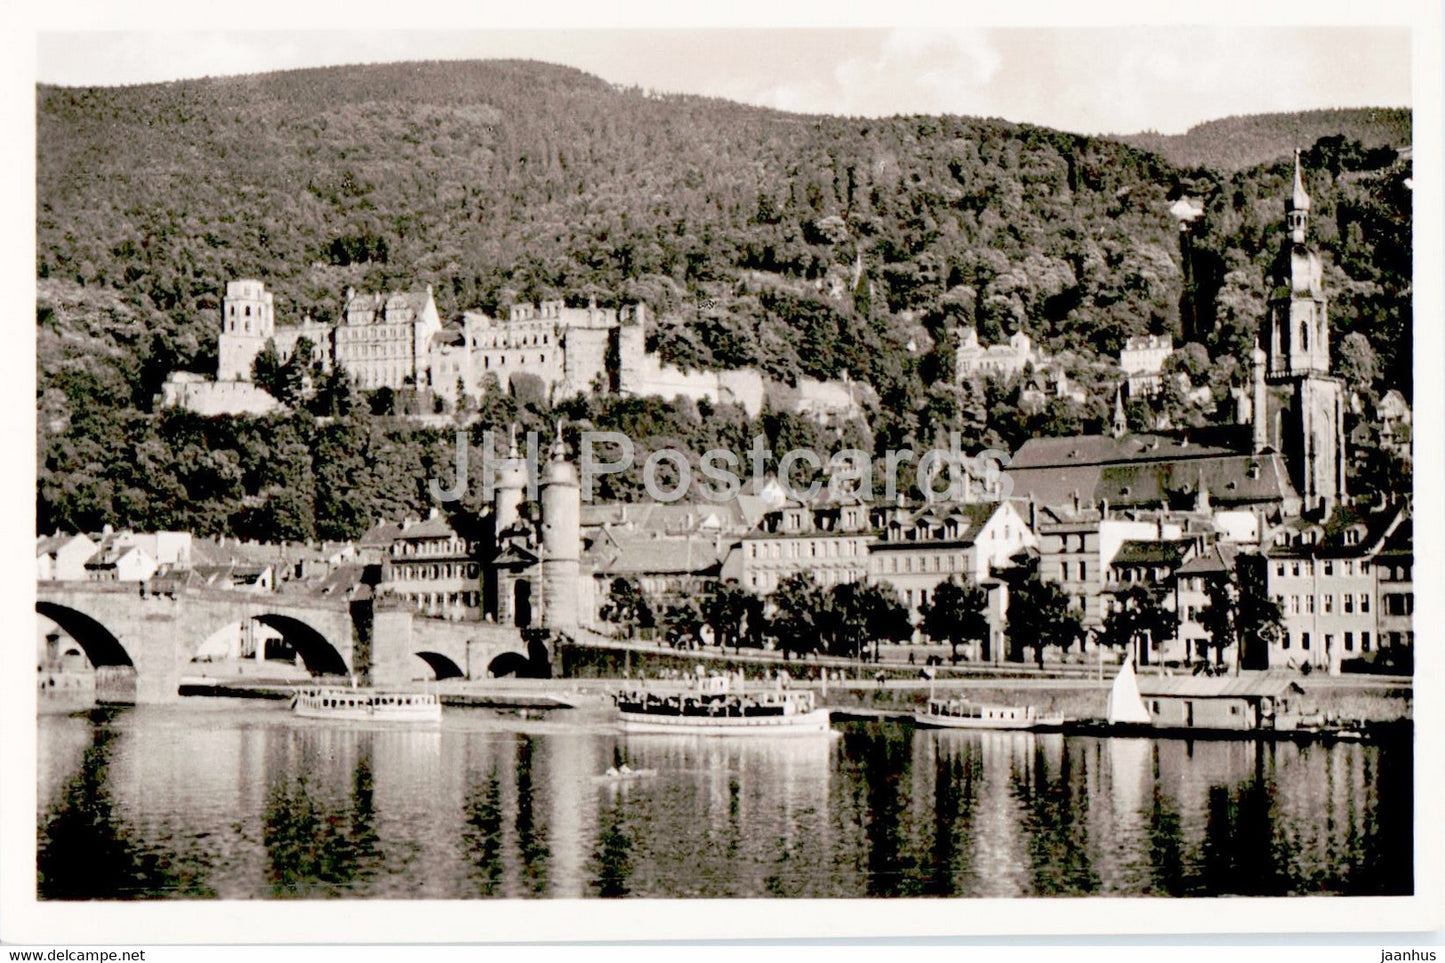 Heidelberg - Partie am Neckar - old postcard - Germany - unused - JH Postcards